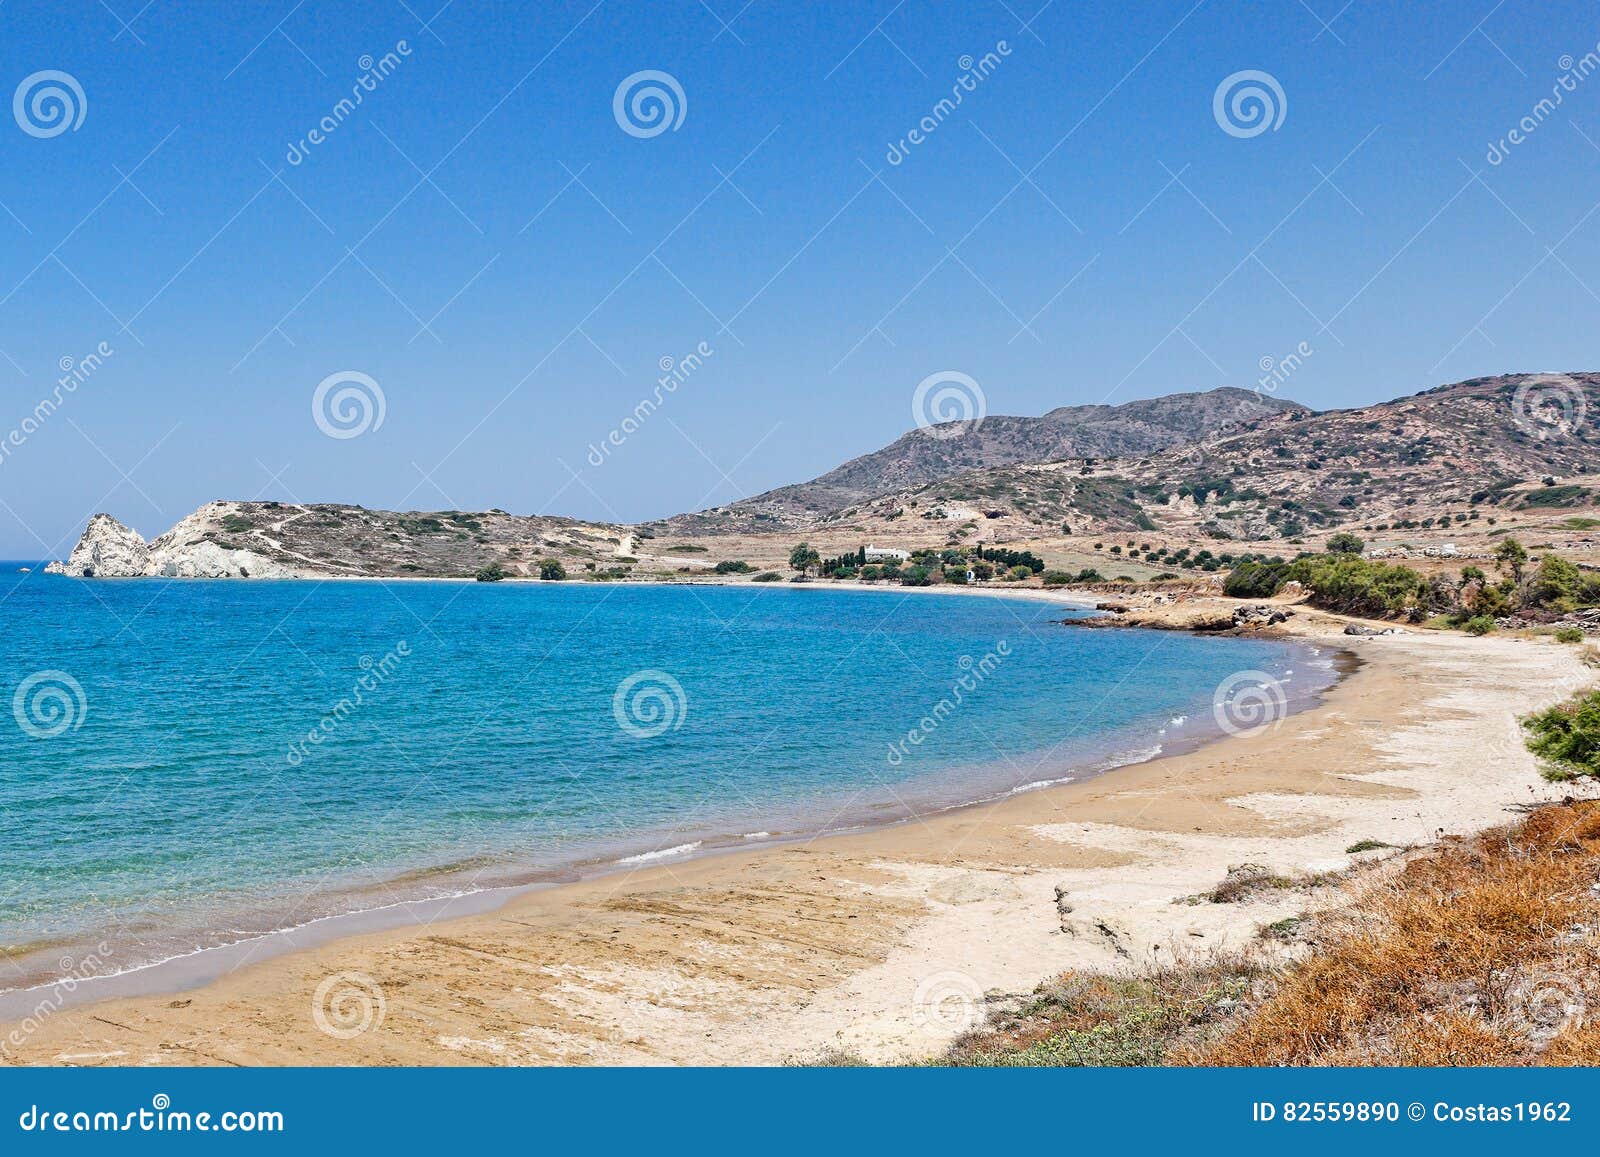 the beach mavrospilia in kimolos, greece